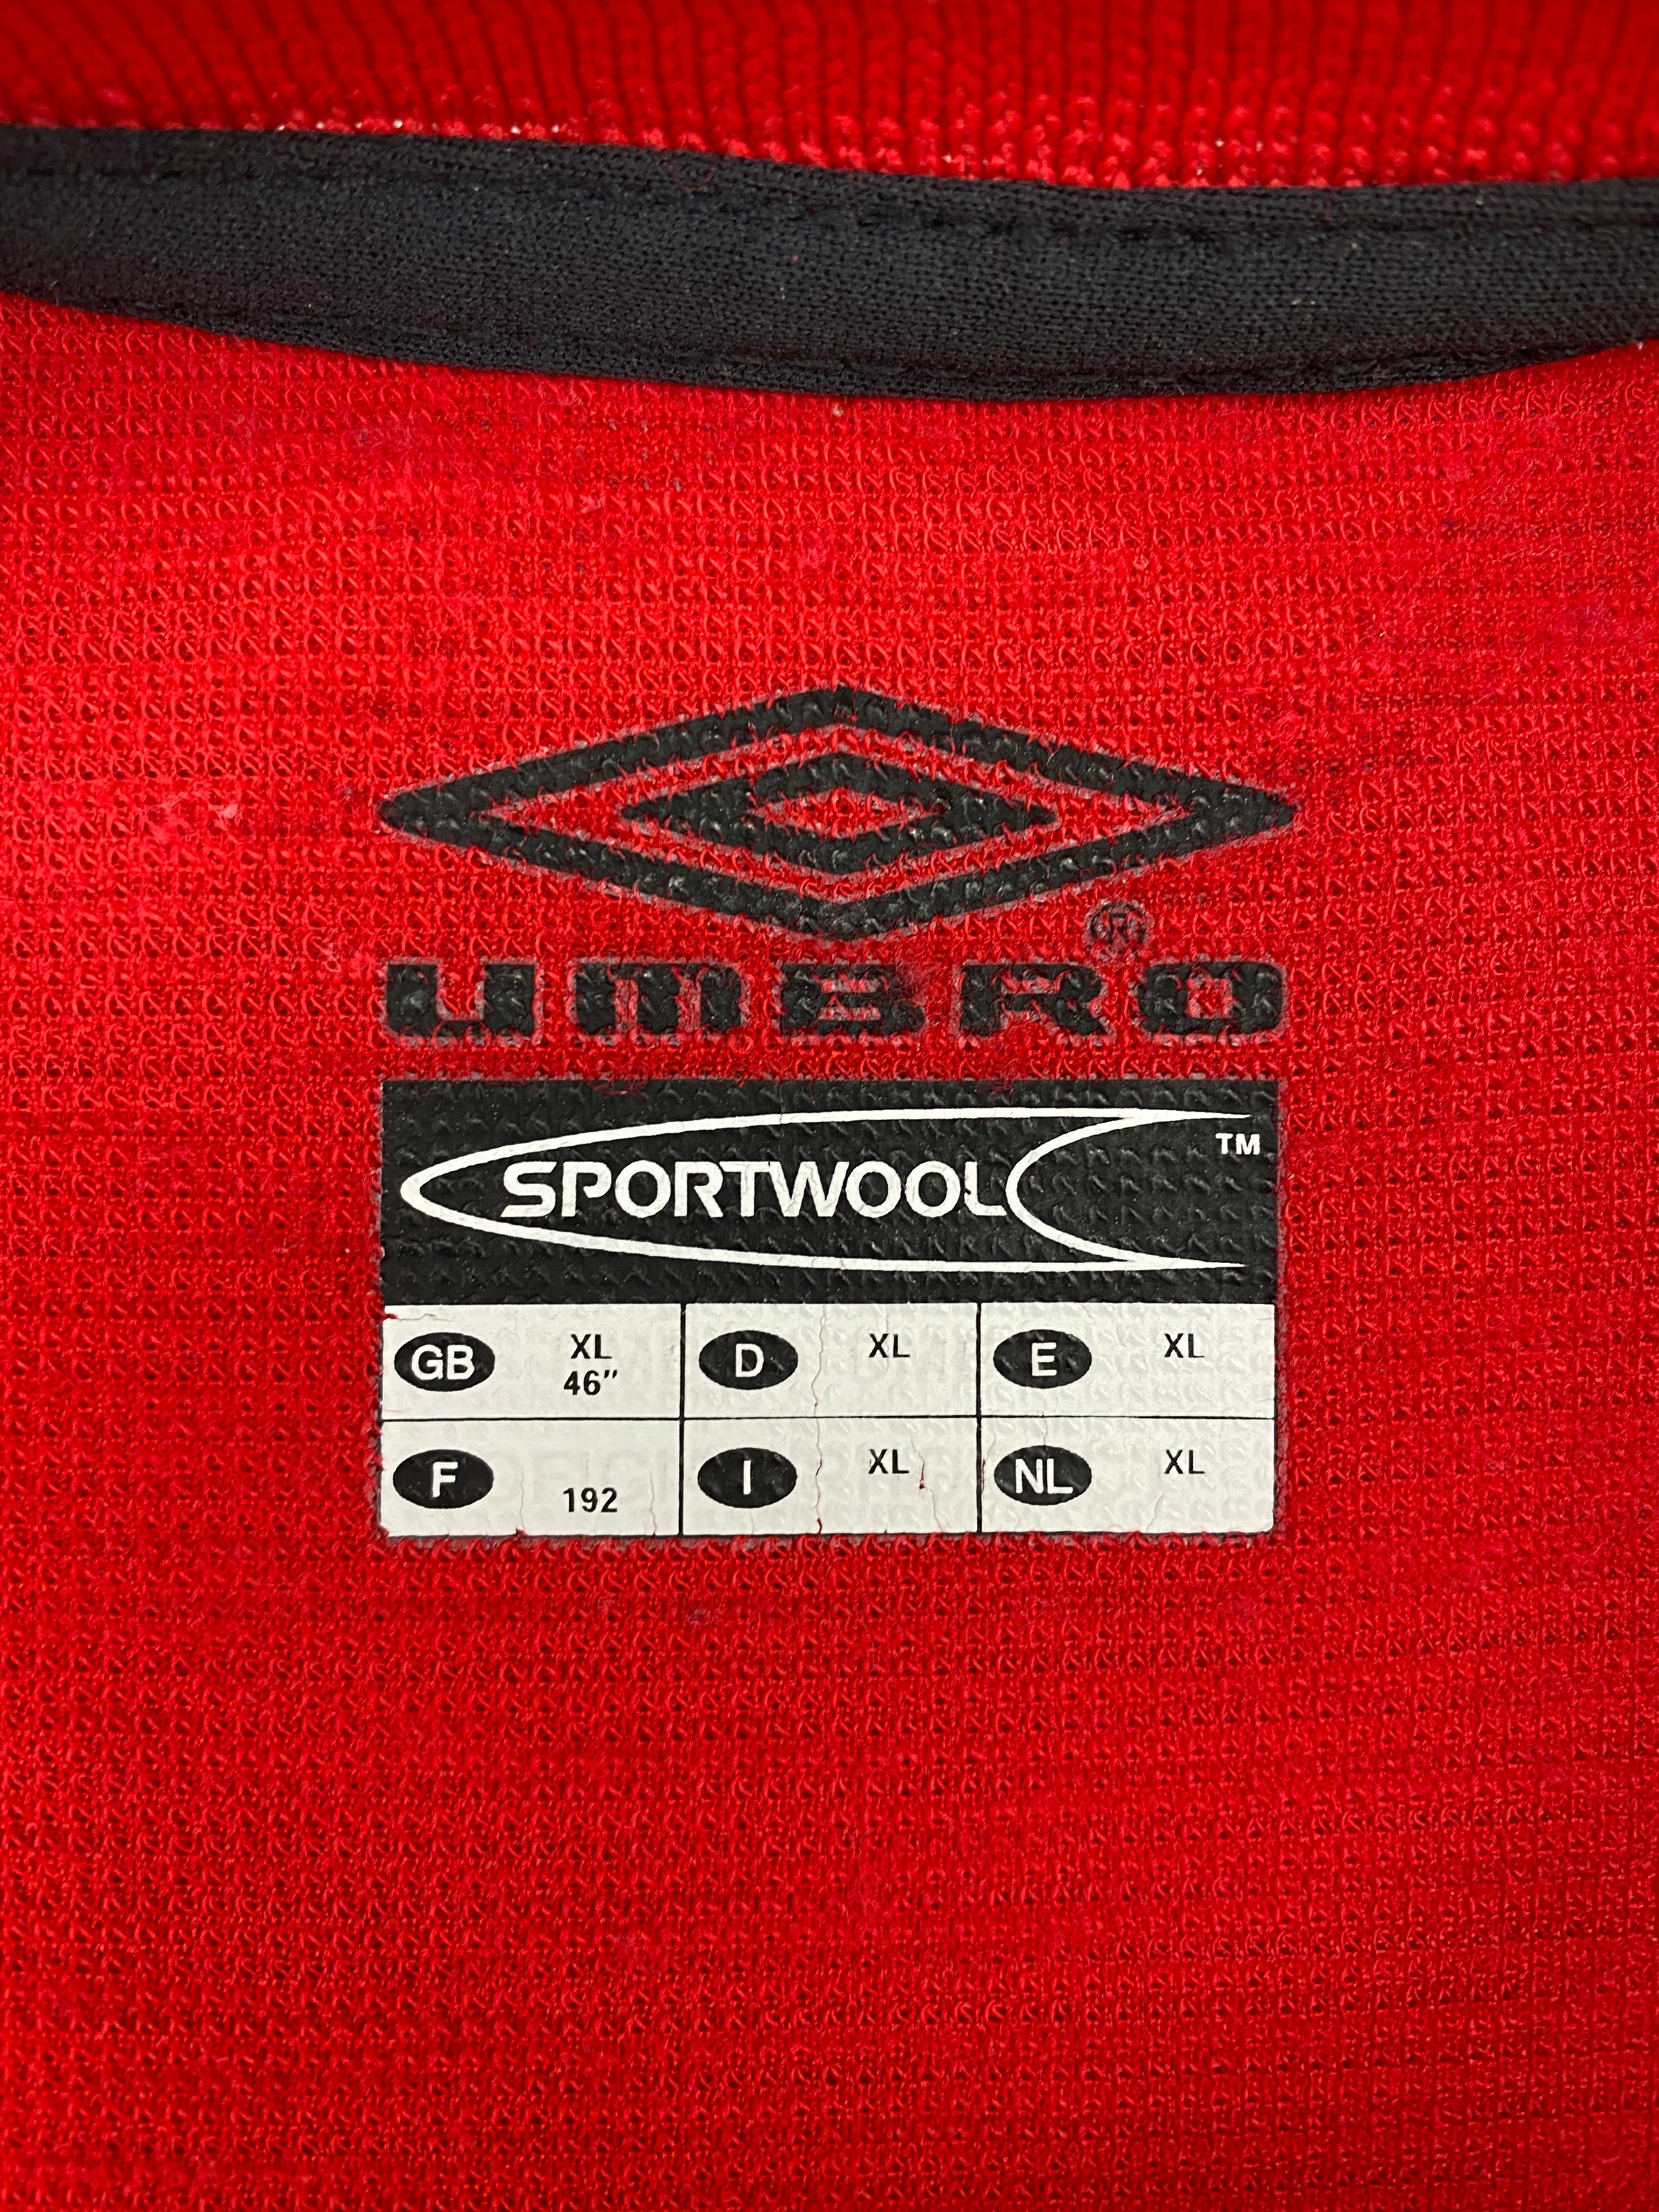 2000/02 Manchester United Home Shirt (XL) 8.5/10